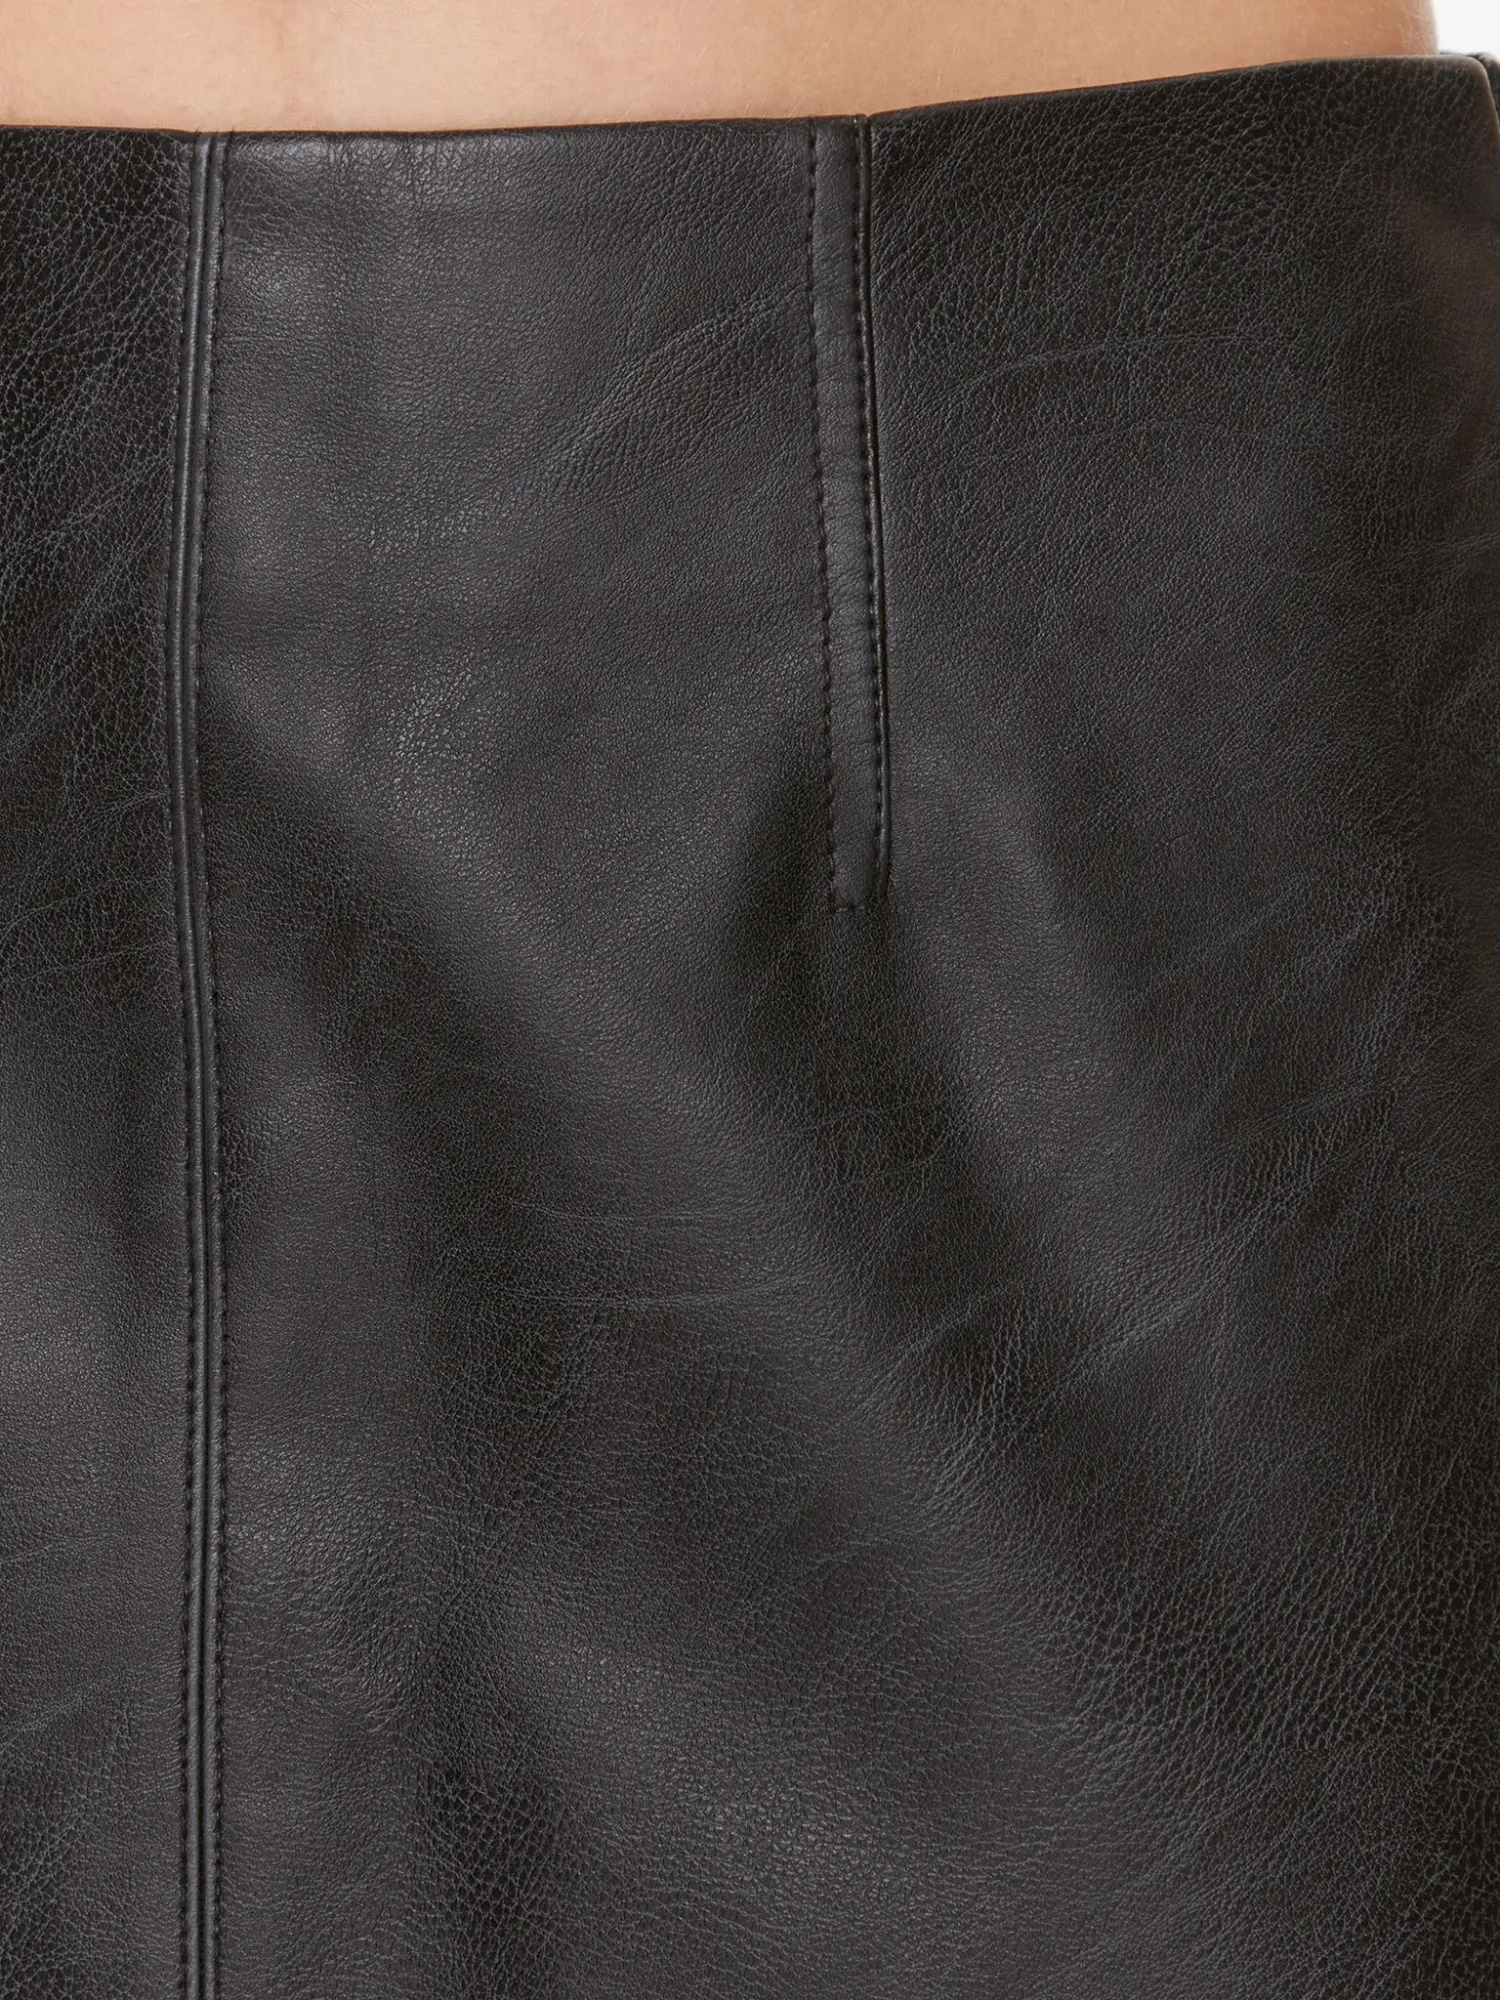 CALVIN KLEIN JEANS Faux Leather | CK Choice+Attitude Black Skirt 